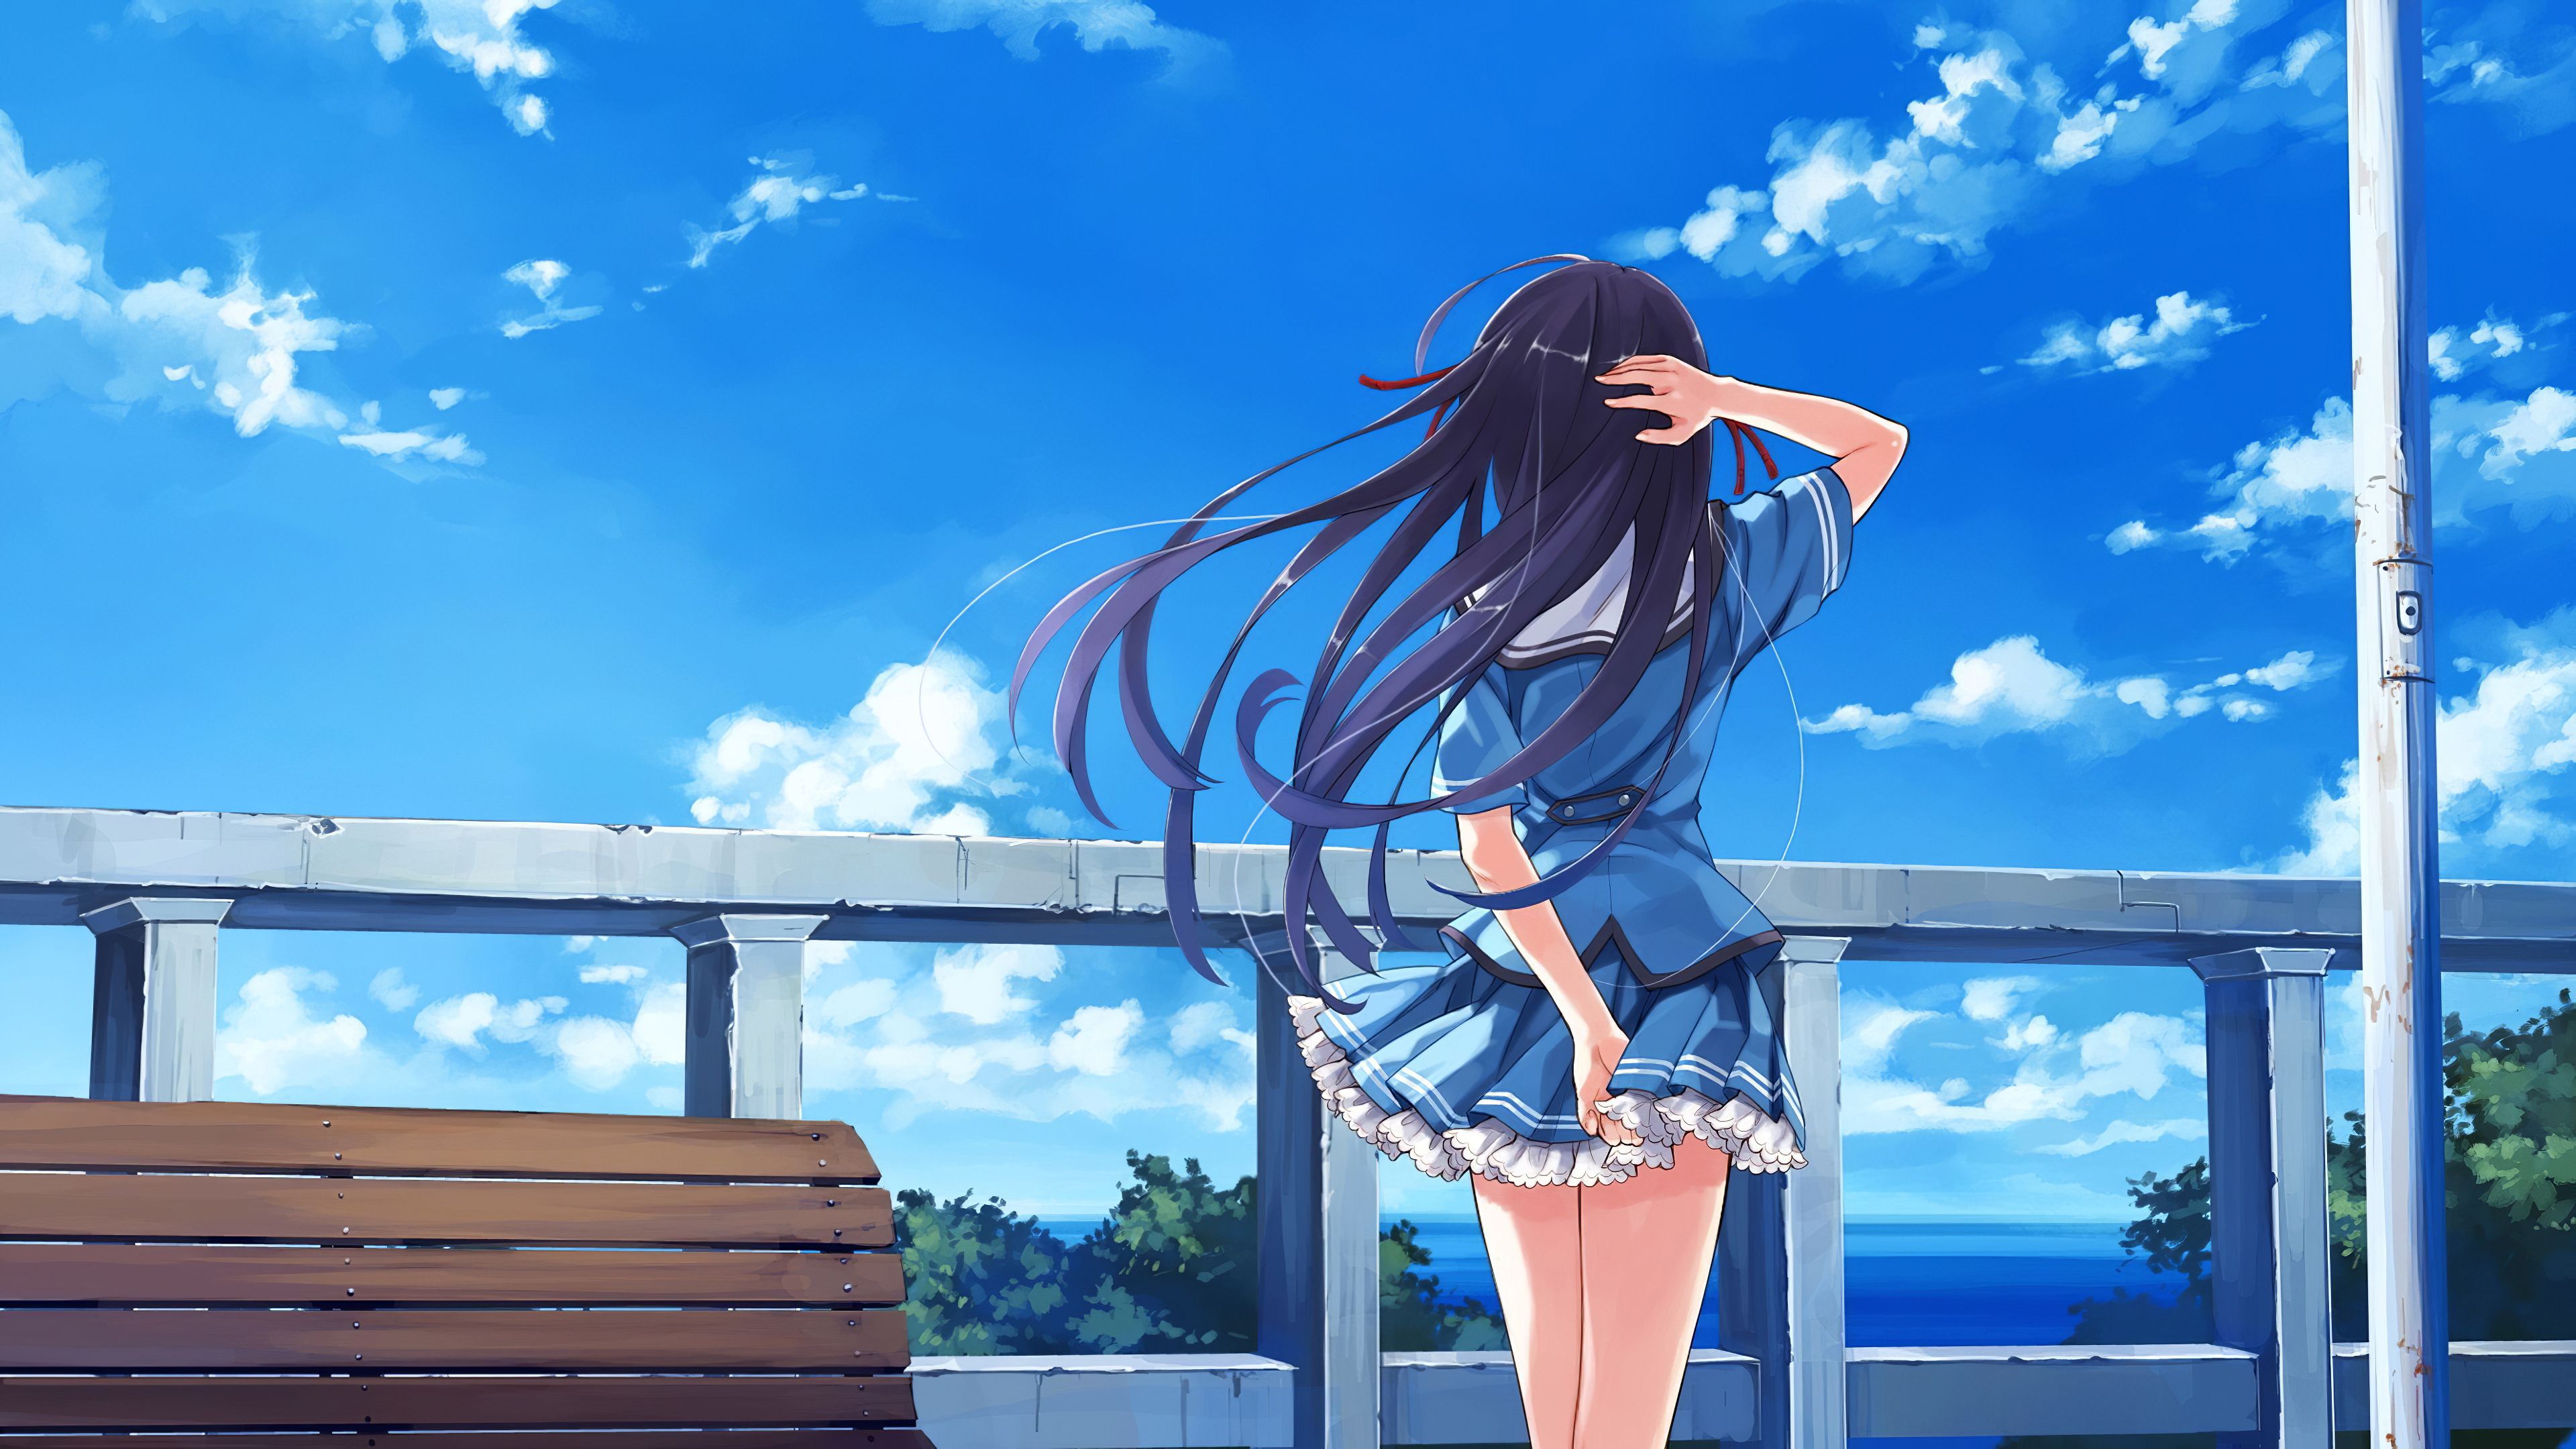 Deep Blue Sky Pure White WingsKoga Sayoko 4k, HD Anime, 4k Wallpaper, Image, Background, Photo and Picture